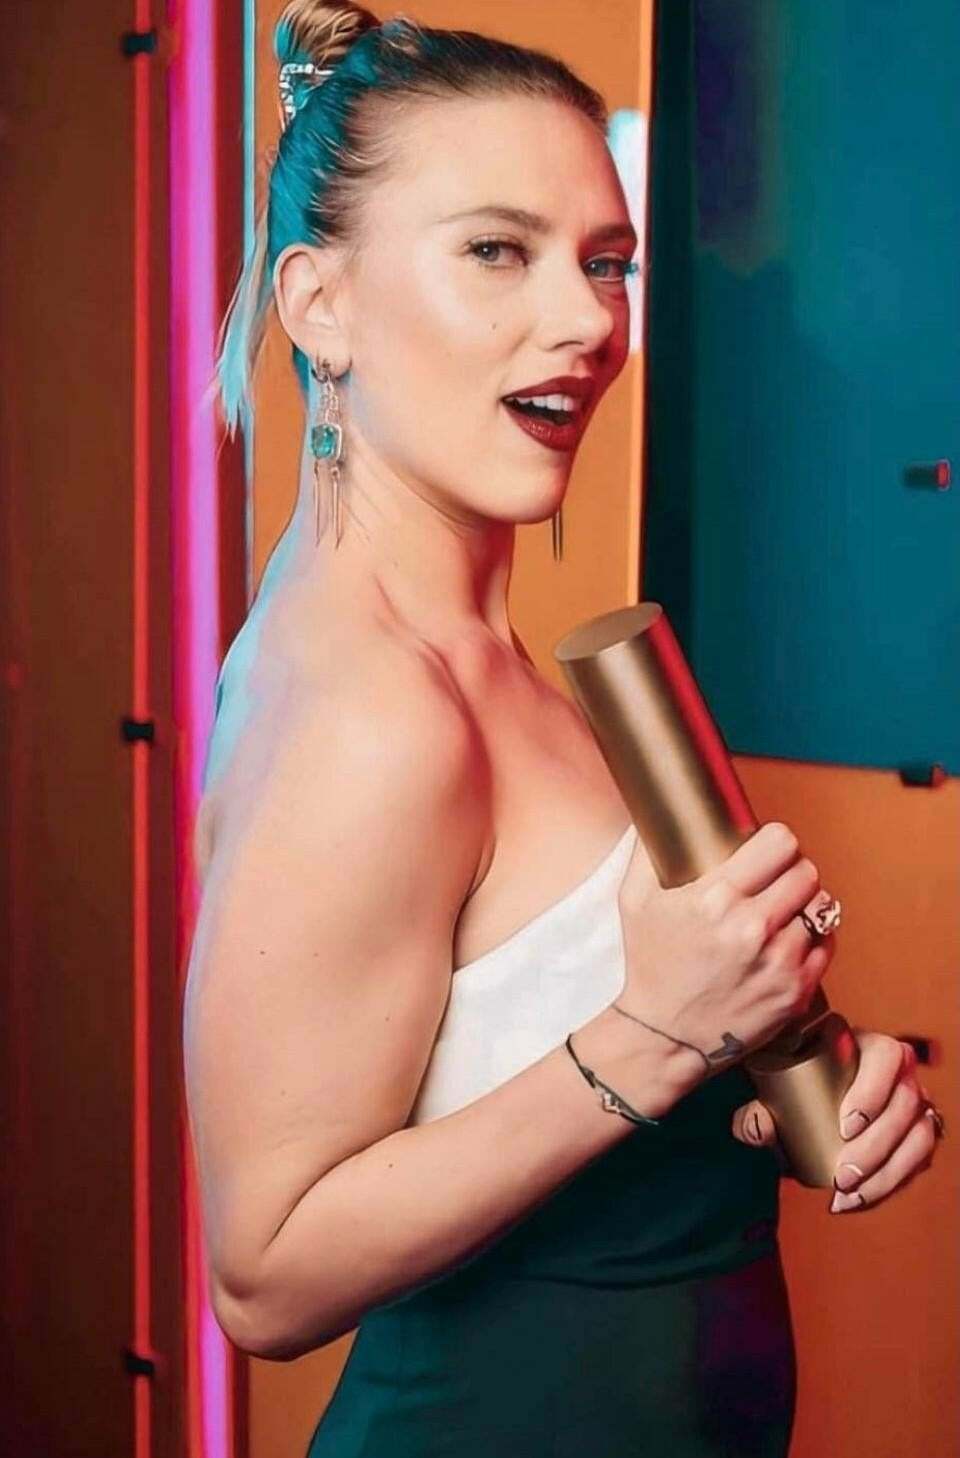 Imagine Scarlett Johansson giving you a handjob How long would